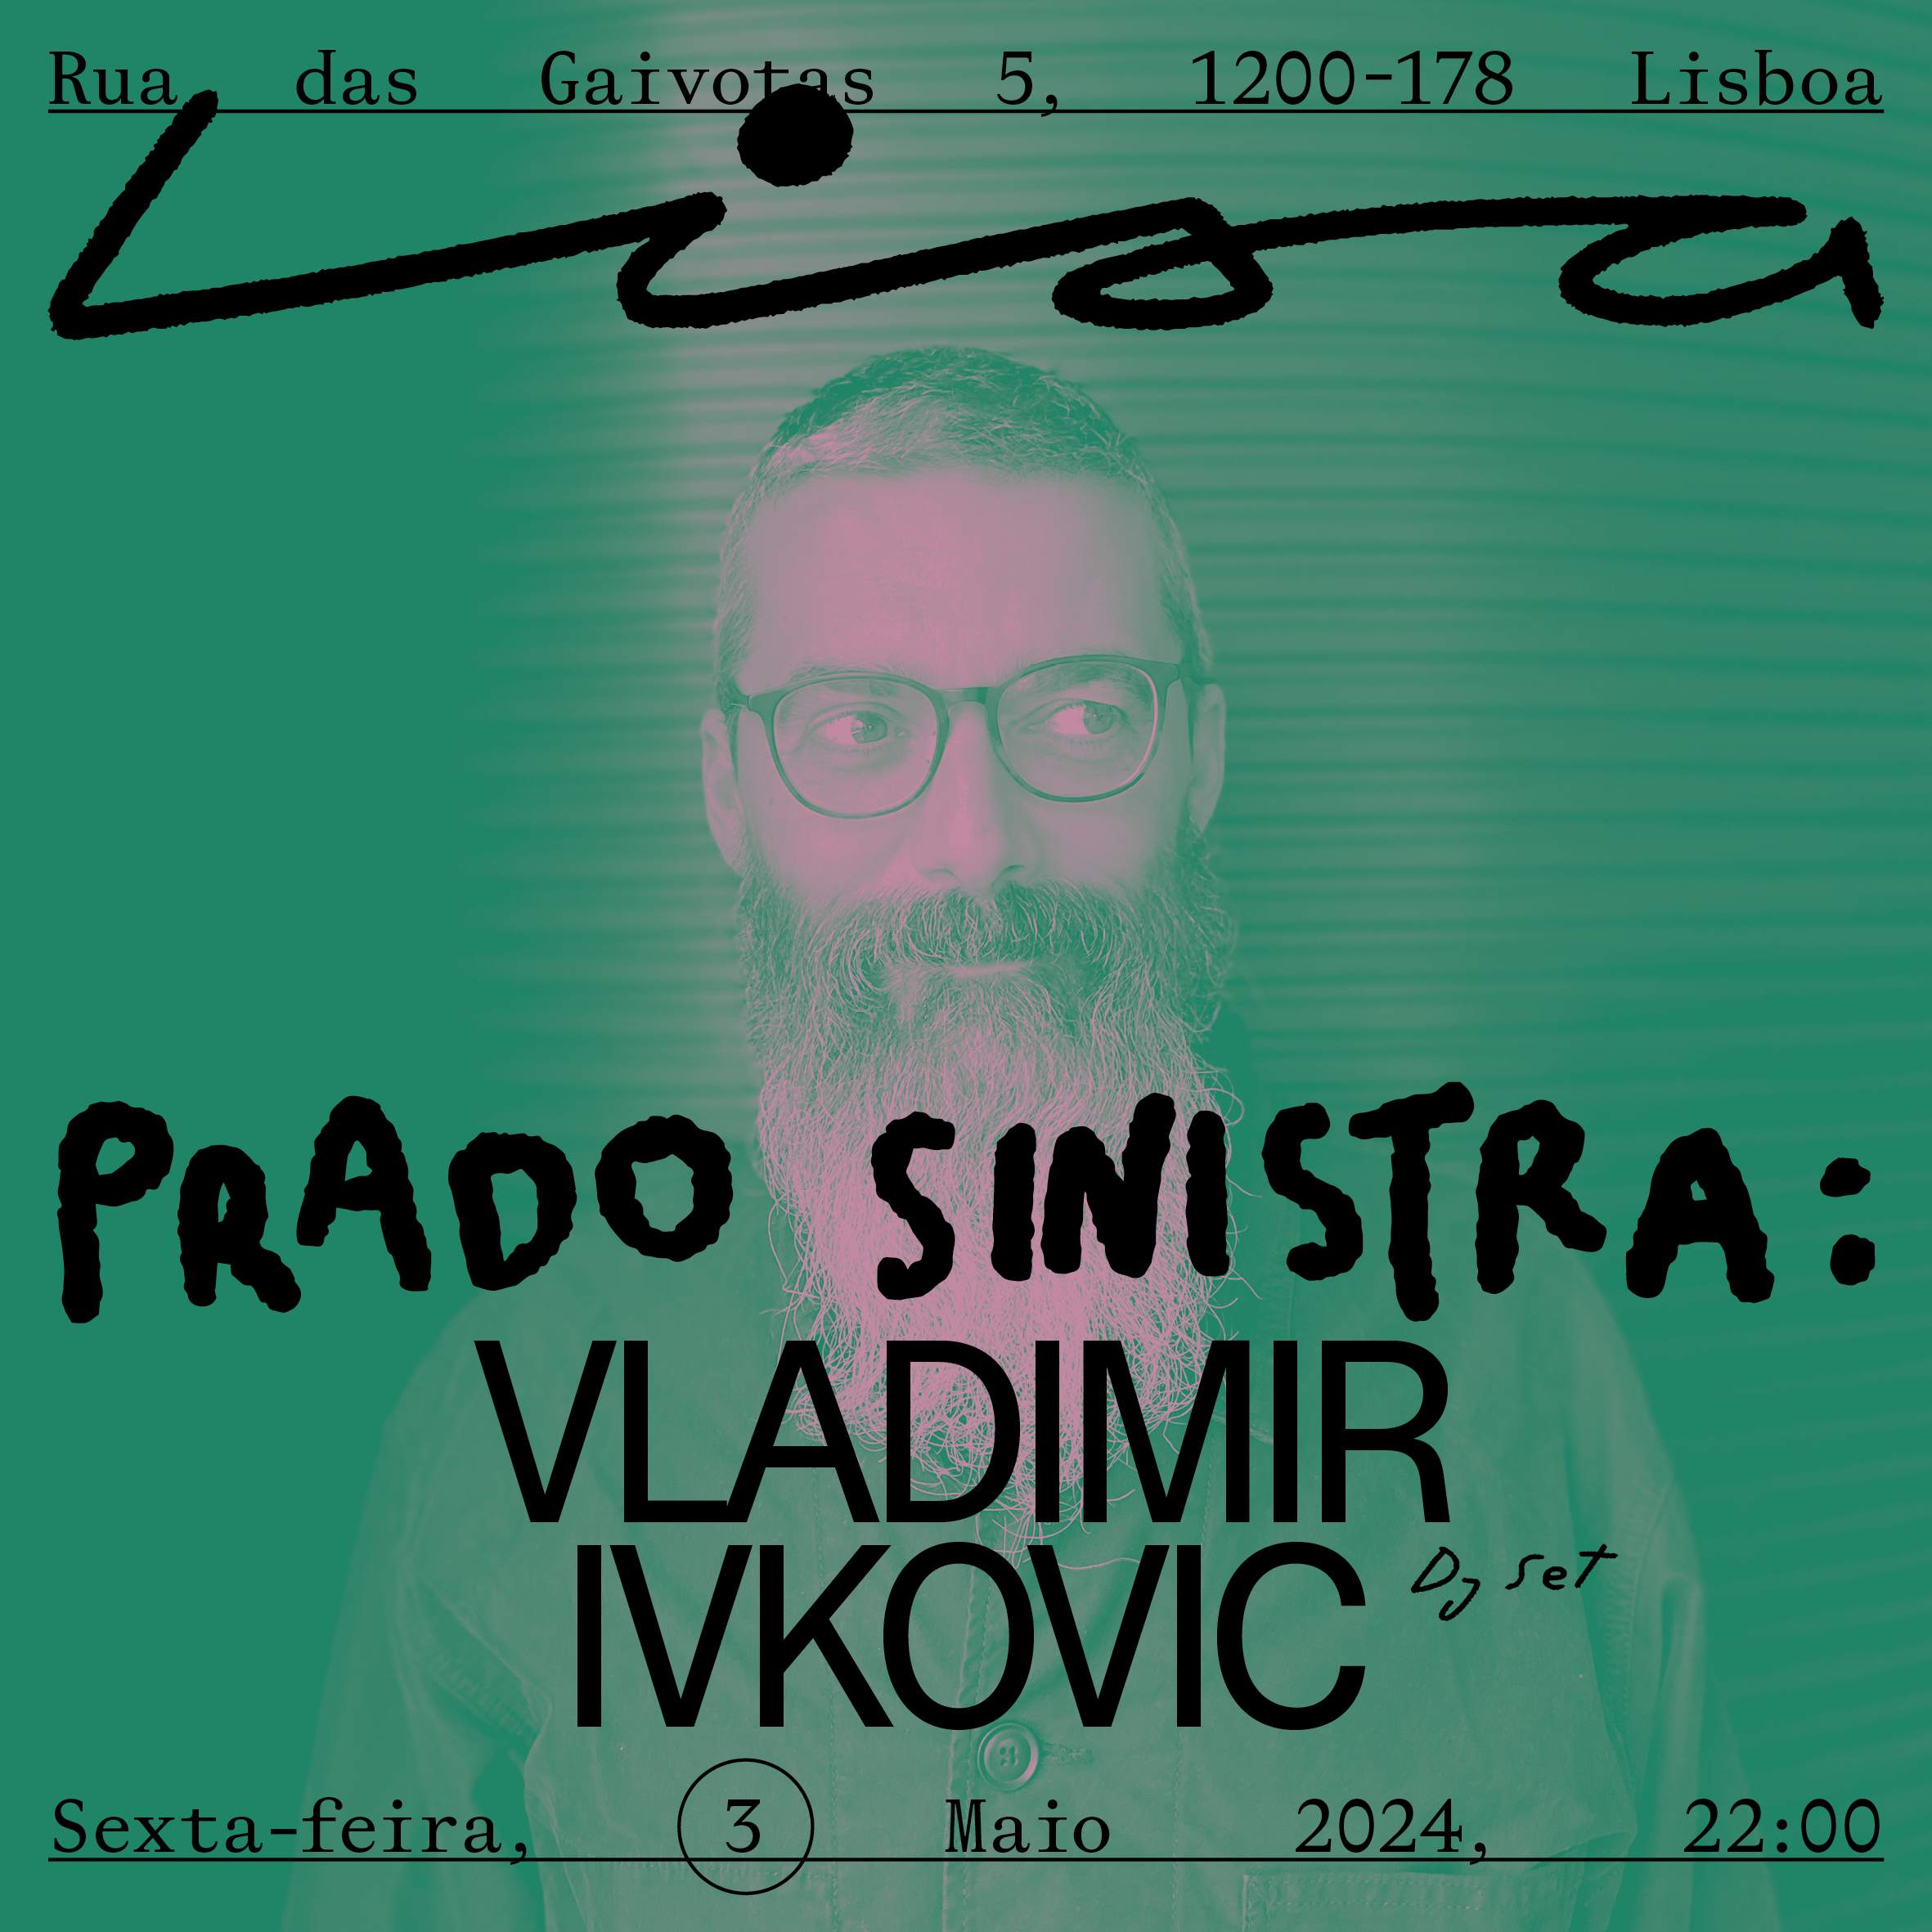 Vladimir Ivkovic - フライヤー表